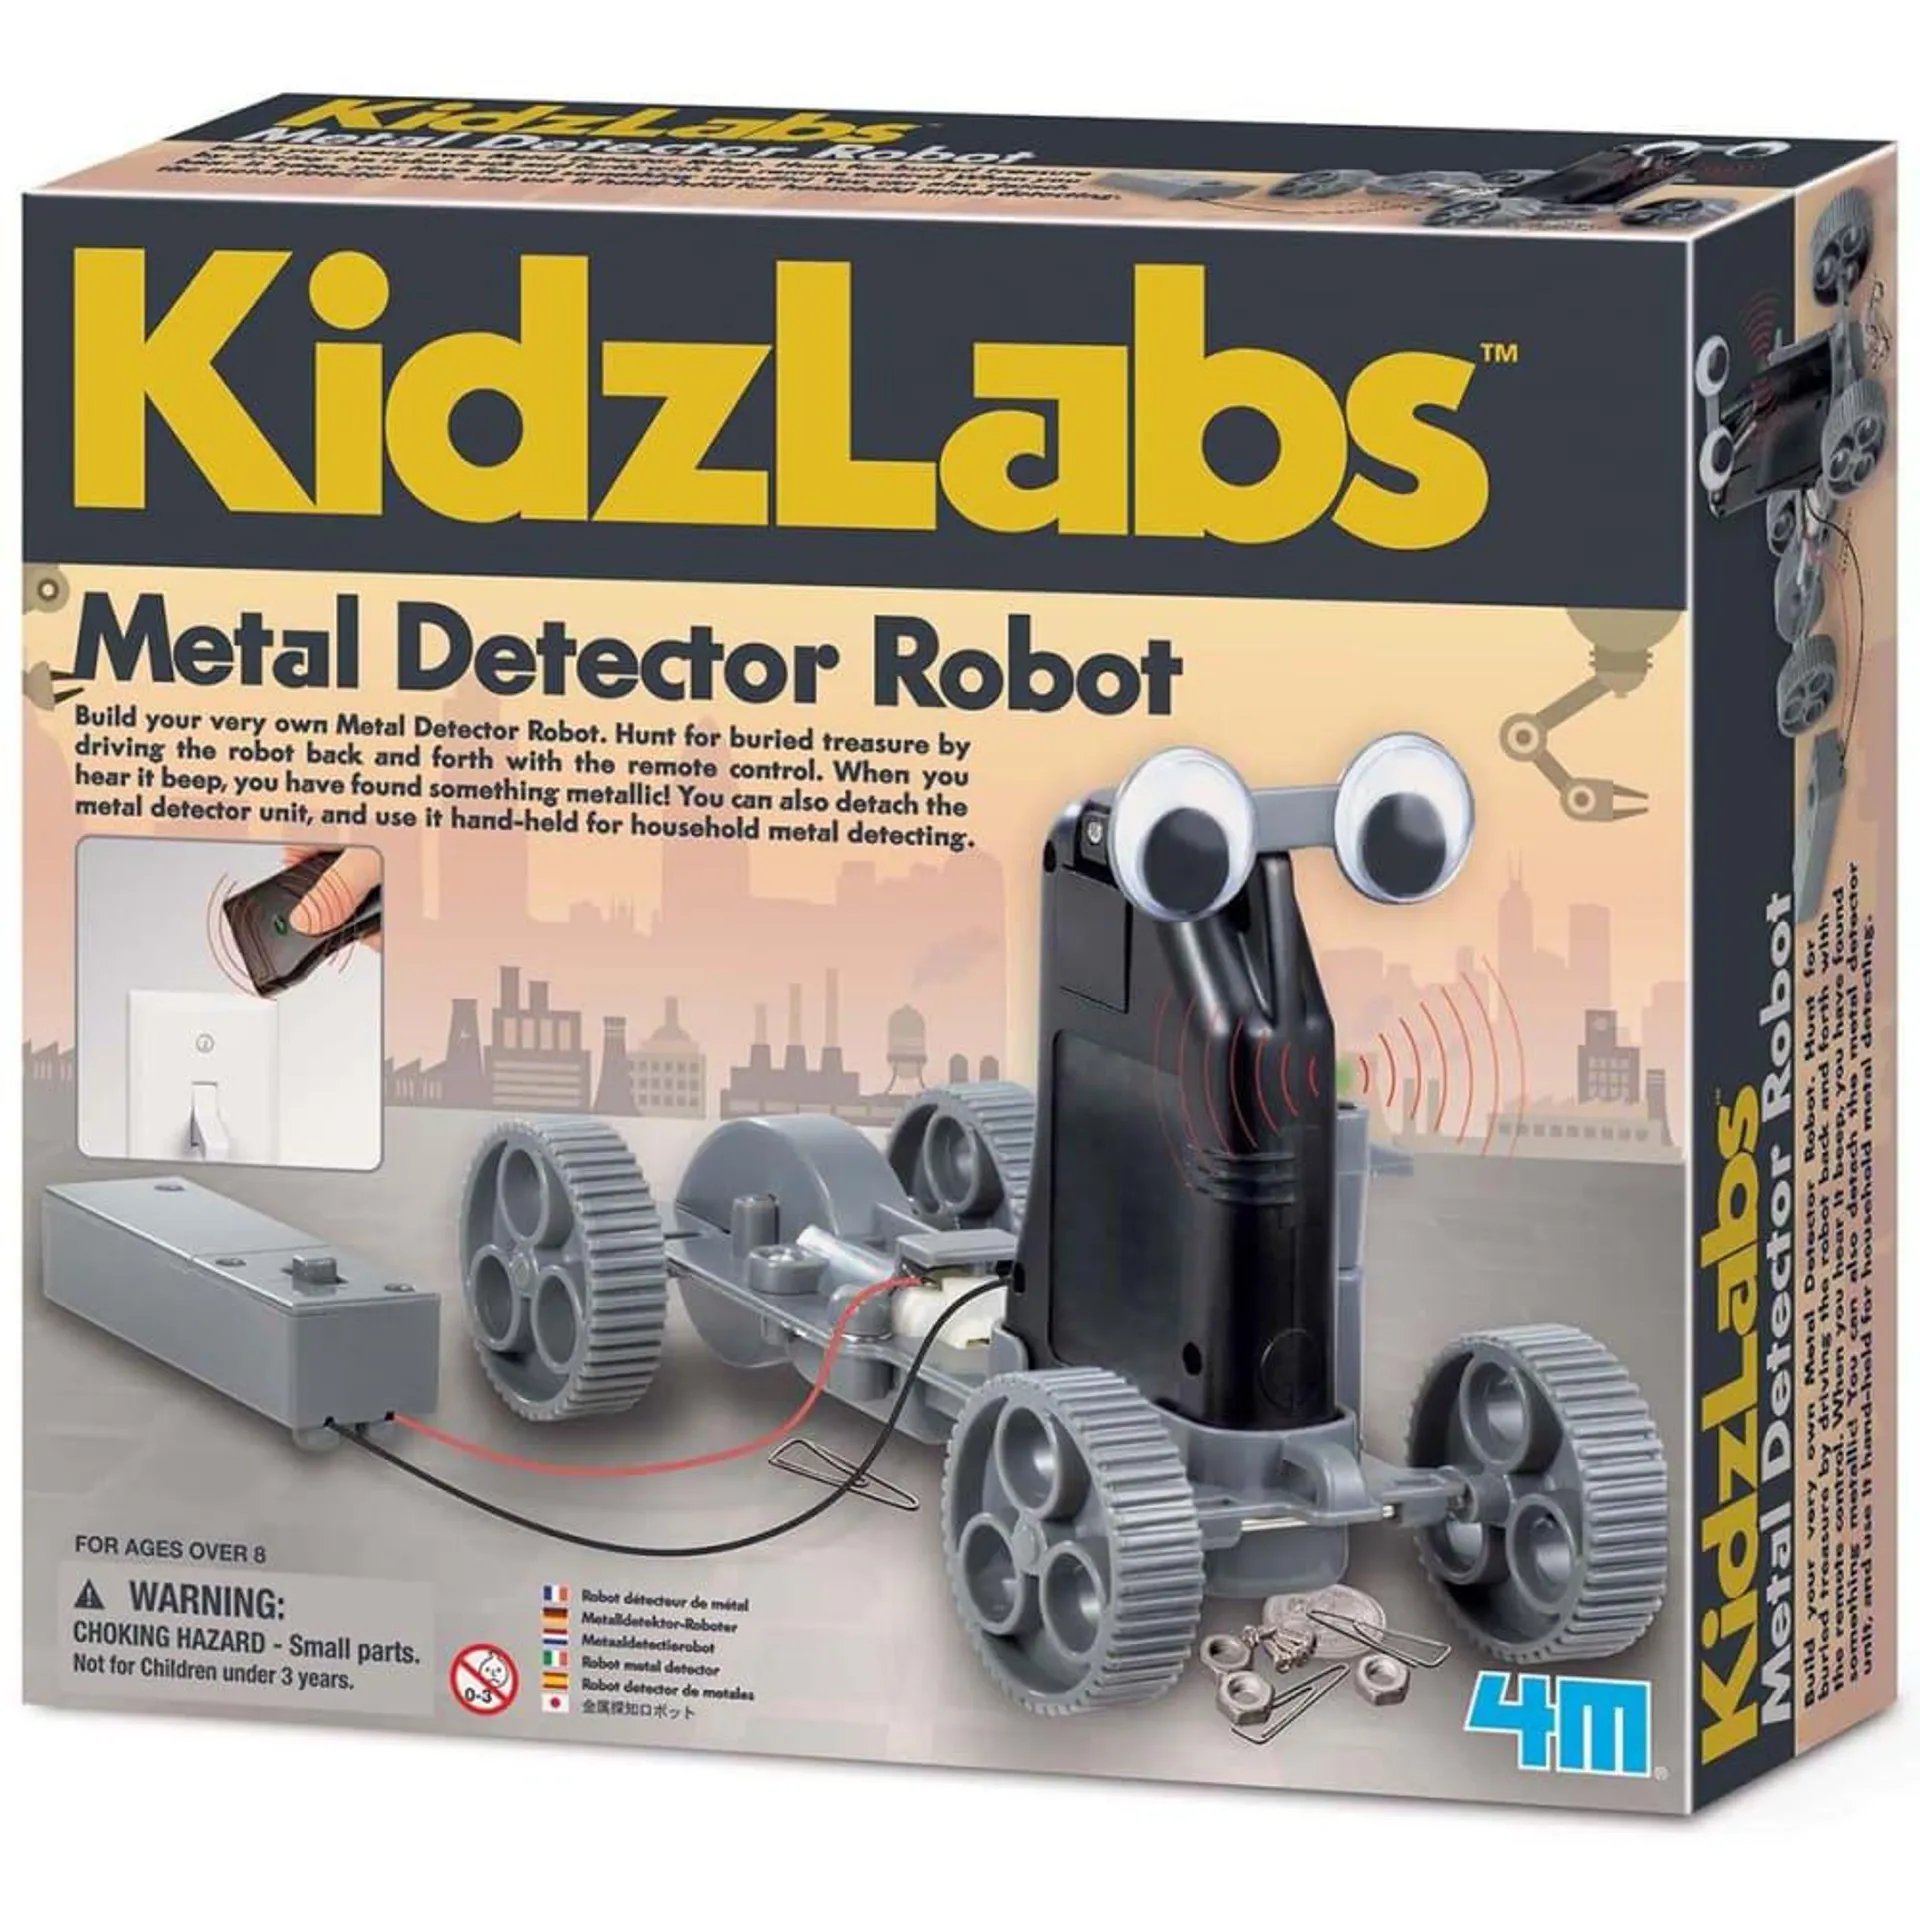 Build Your Own Metal Detector Robot